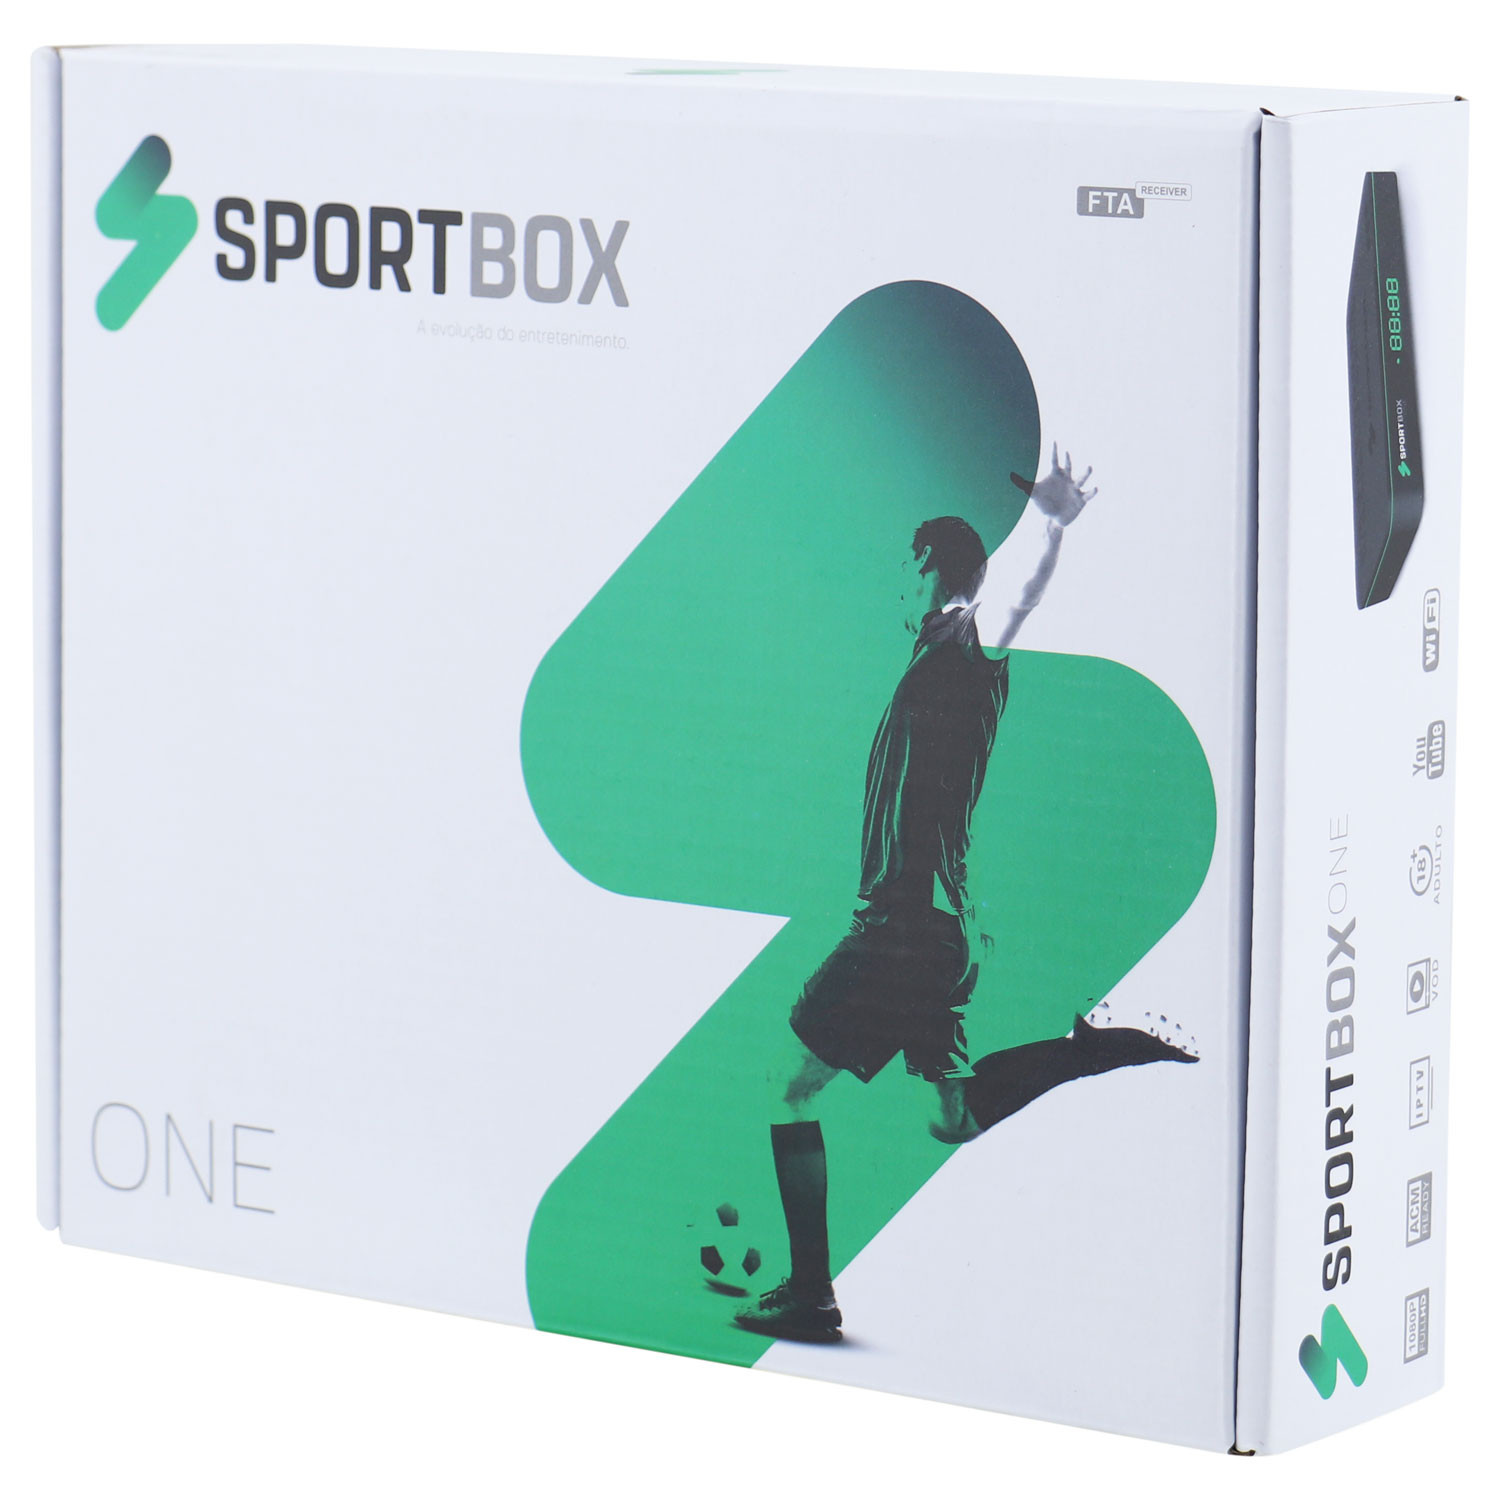 SportBox One Full HD